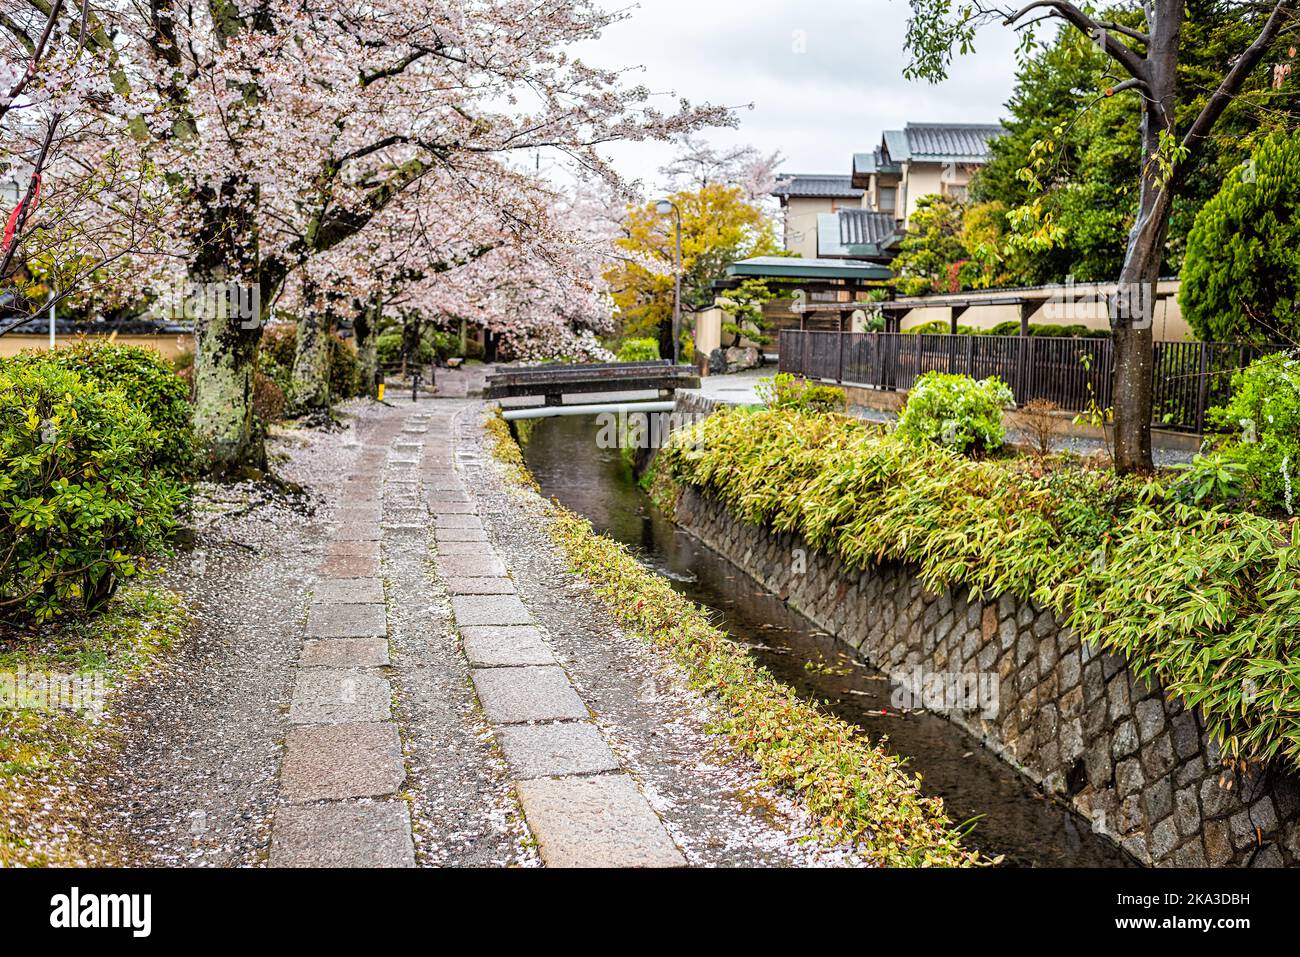 Kyoto, Japan cherry blossom sakura flower petals falling in spring near famous Philosopher's walk path garden park by river and stone bridge Stock Photo